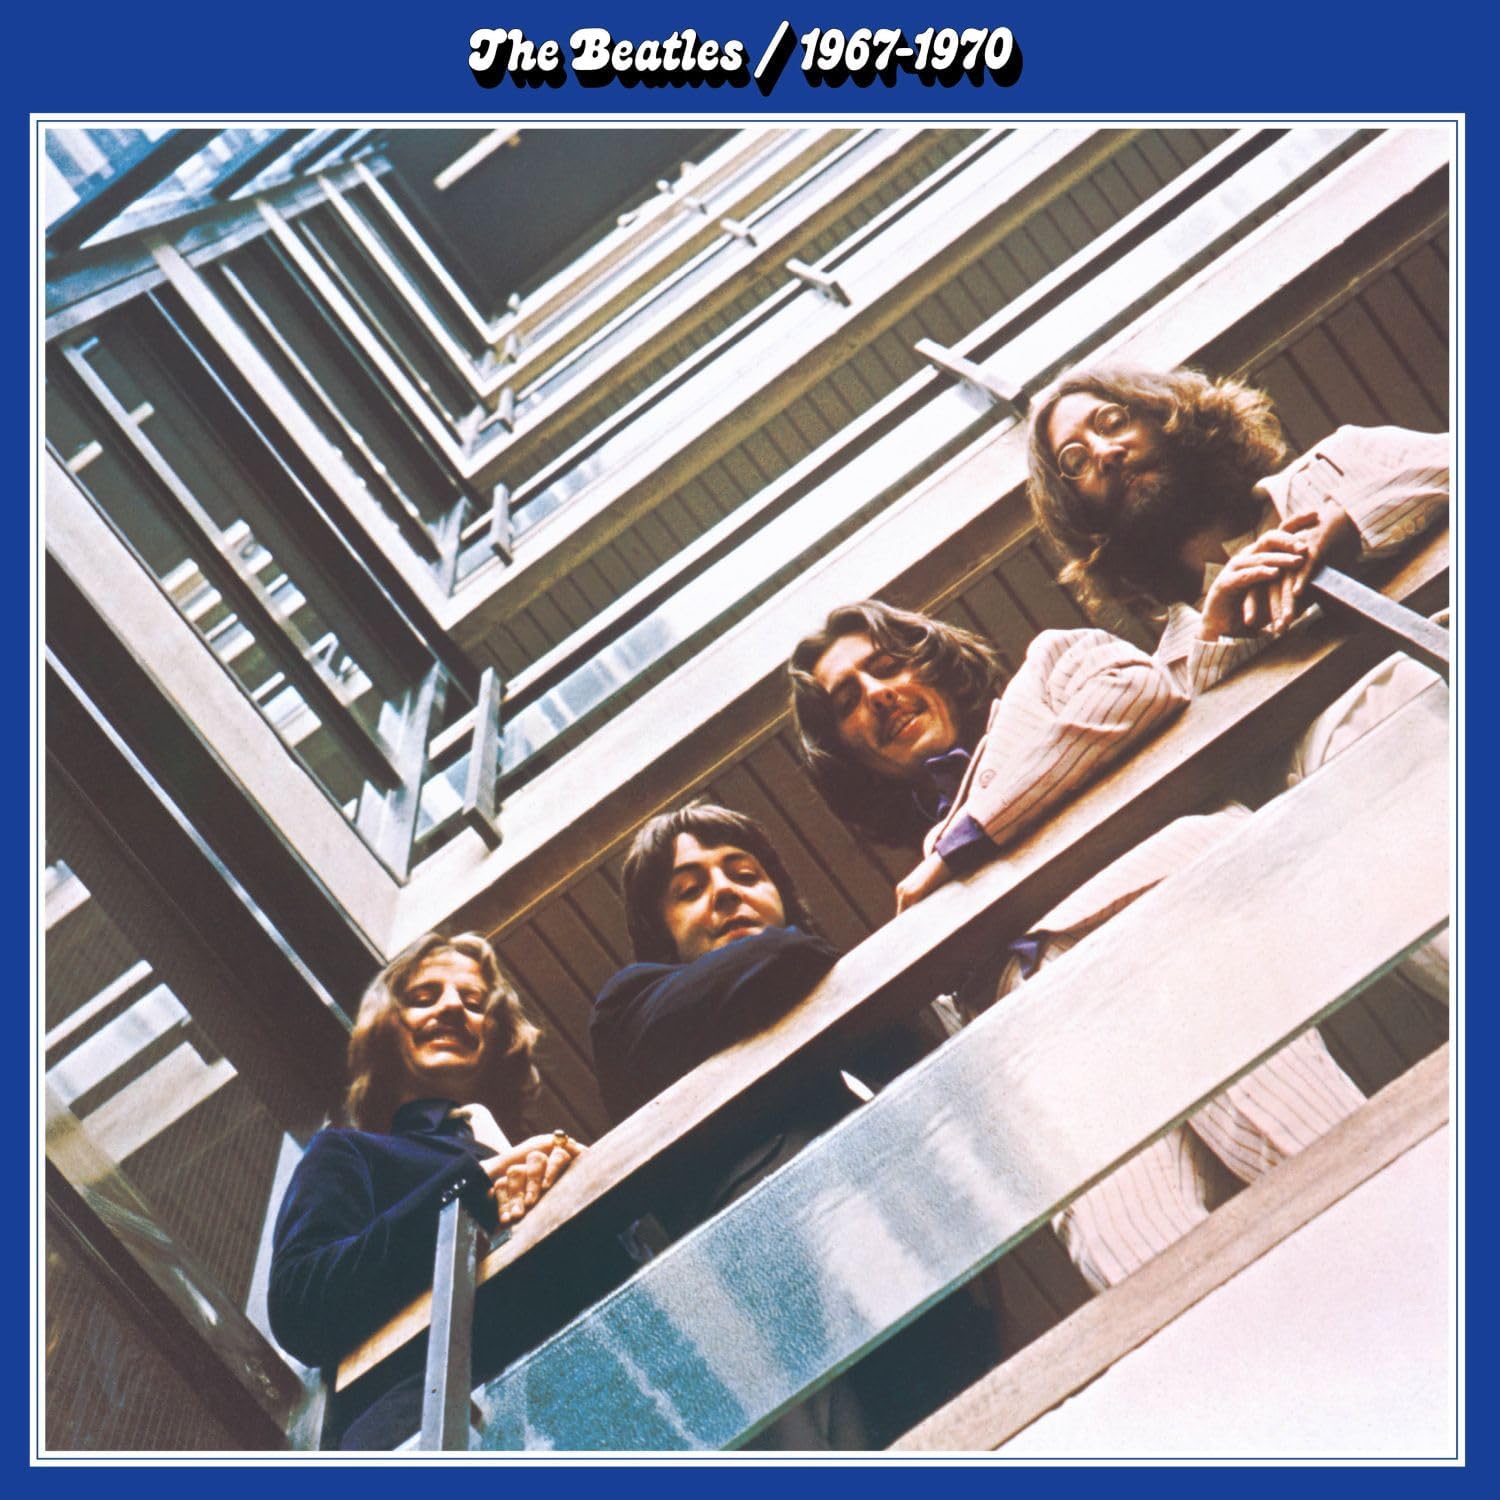 The Beatles 1967-70 CD album cover